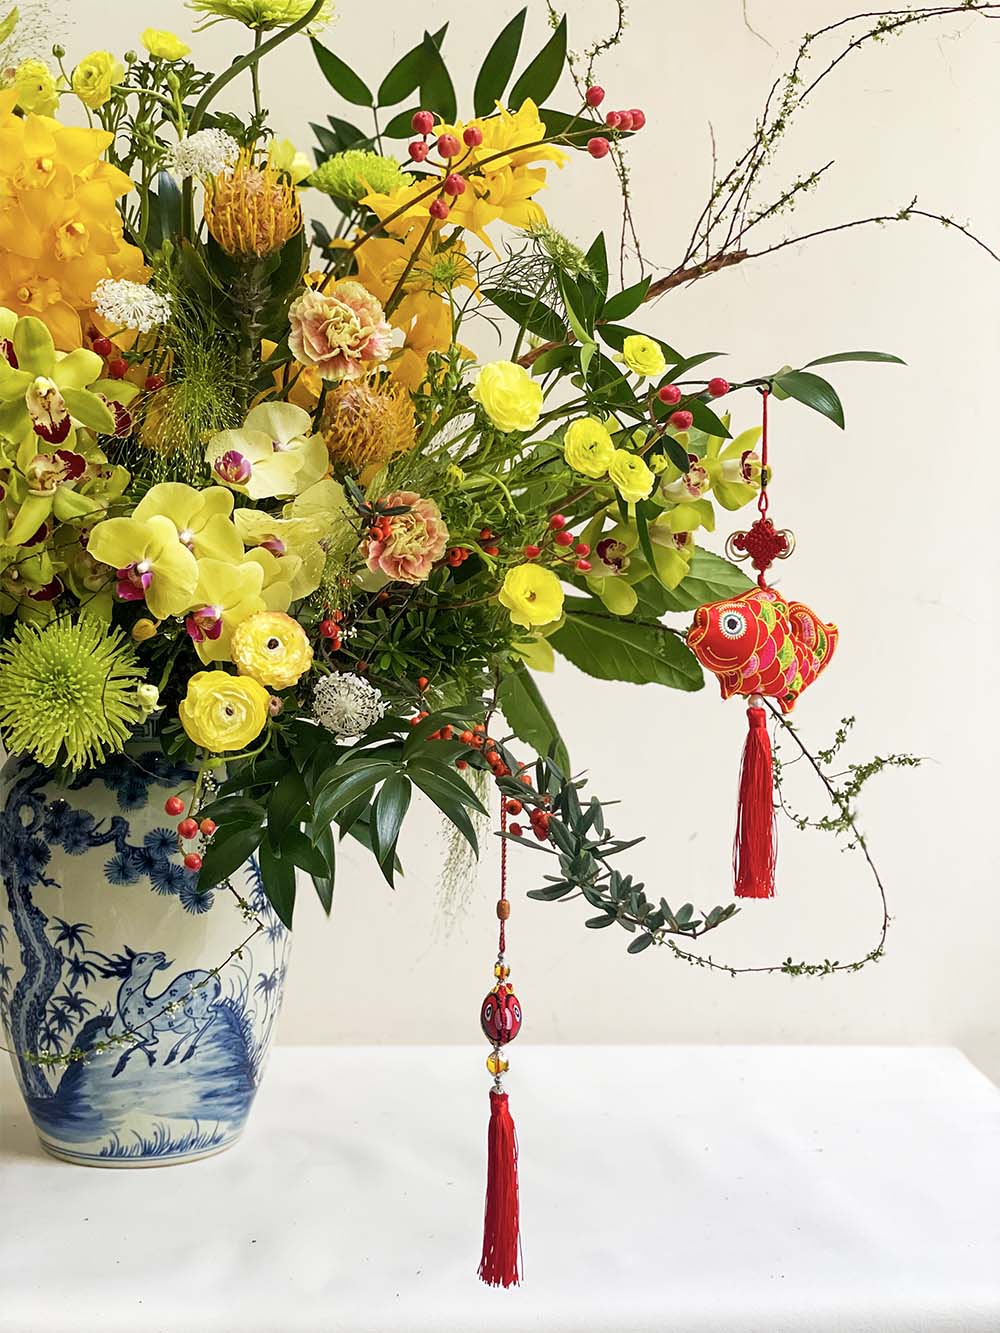 Lunar New Year Flower Arrangement “Joy”